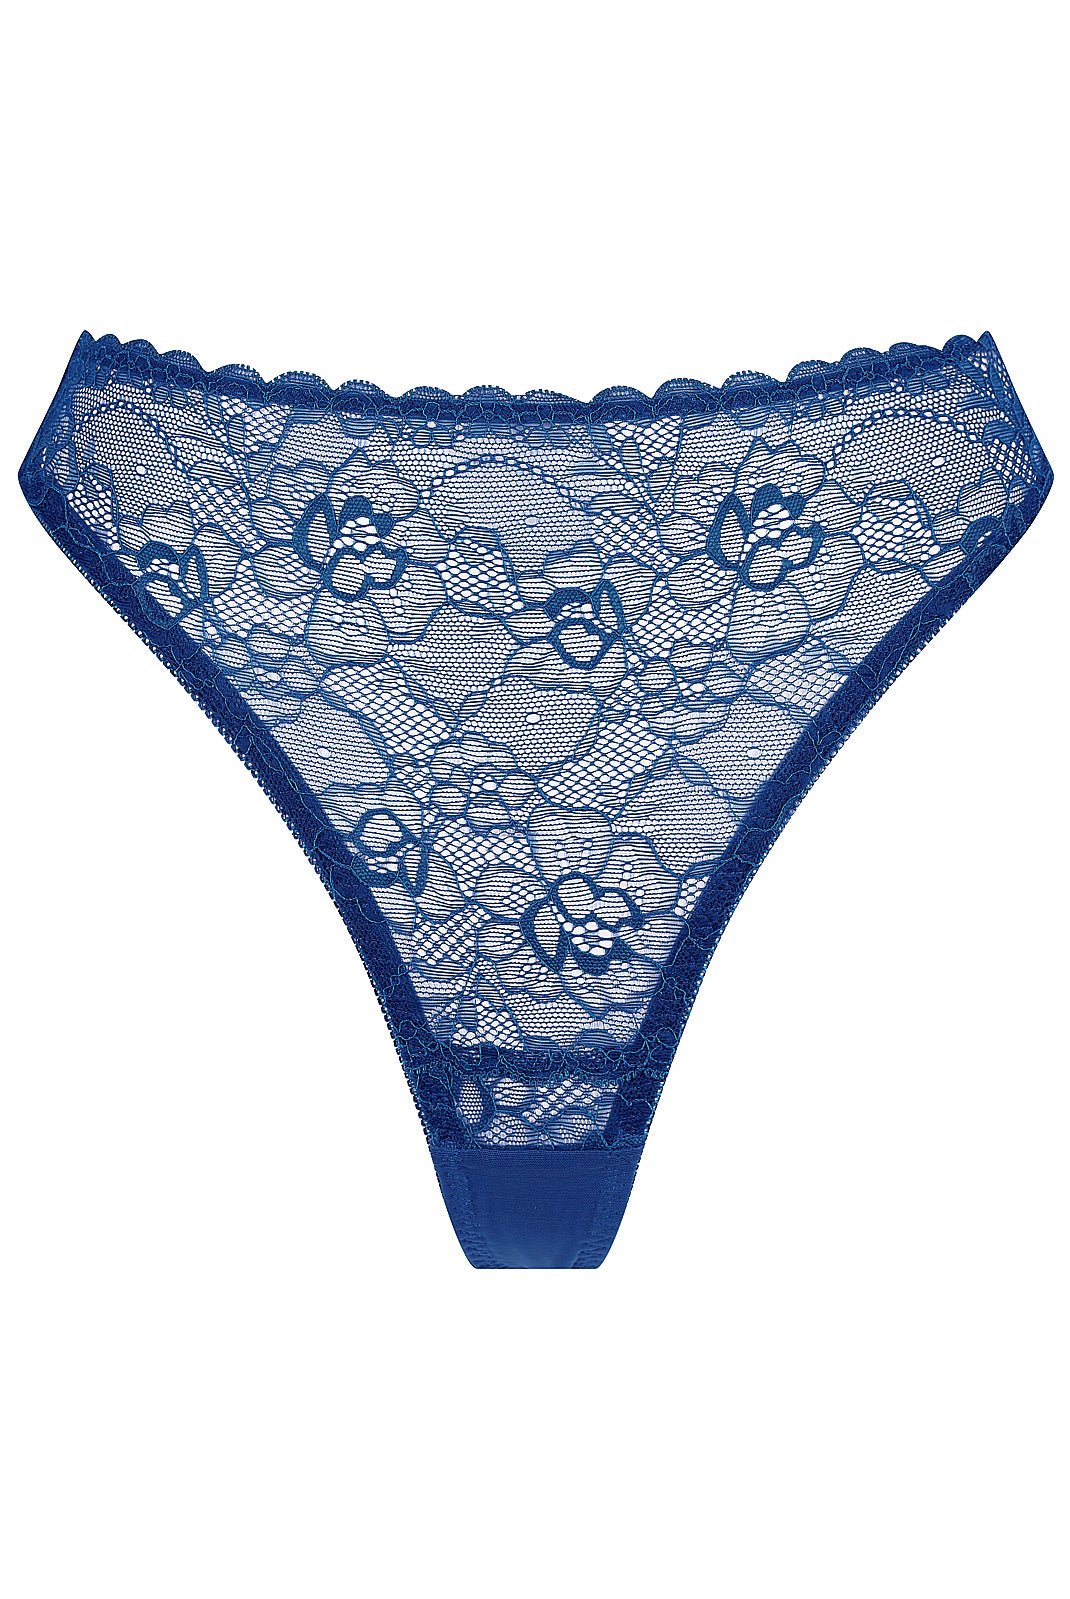 Maverick High Waist Cobalt Underwear - Kat the Label Lingerie Australia